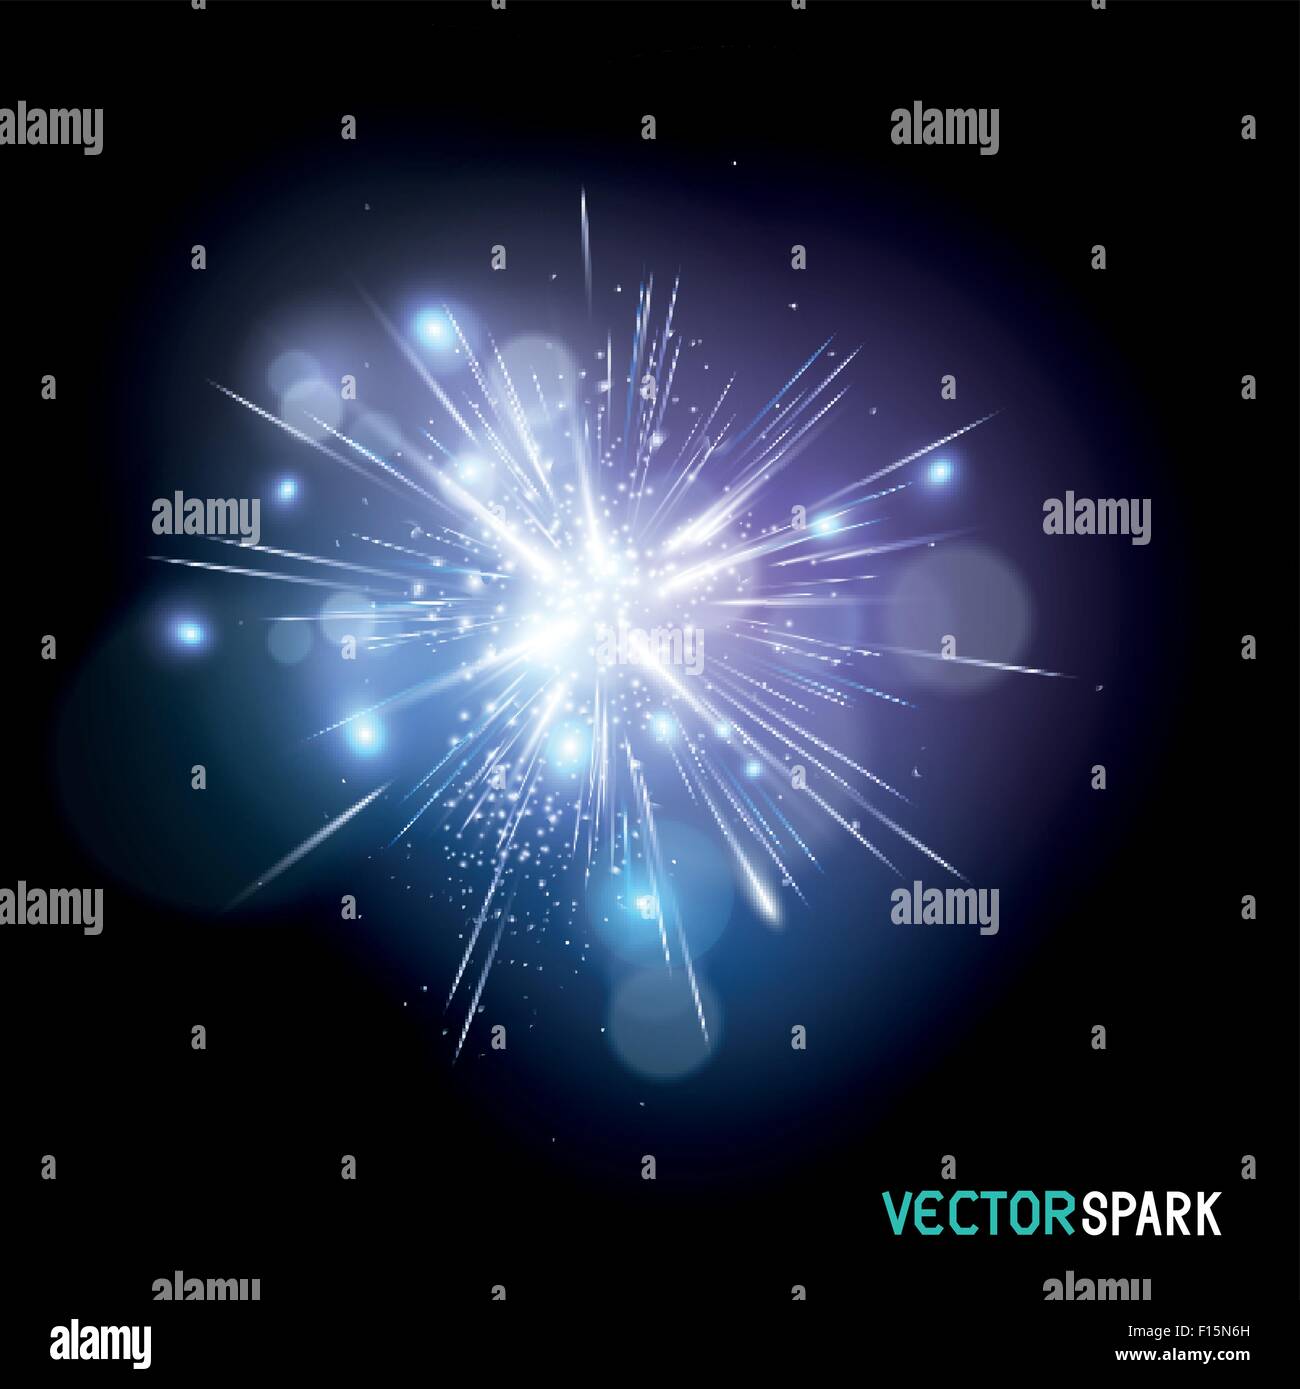 Vektor-Spark-Effekt - schöne helle Funken-Vektor-Illustration. Stock Vektor